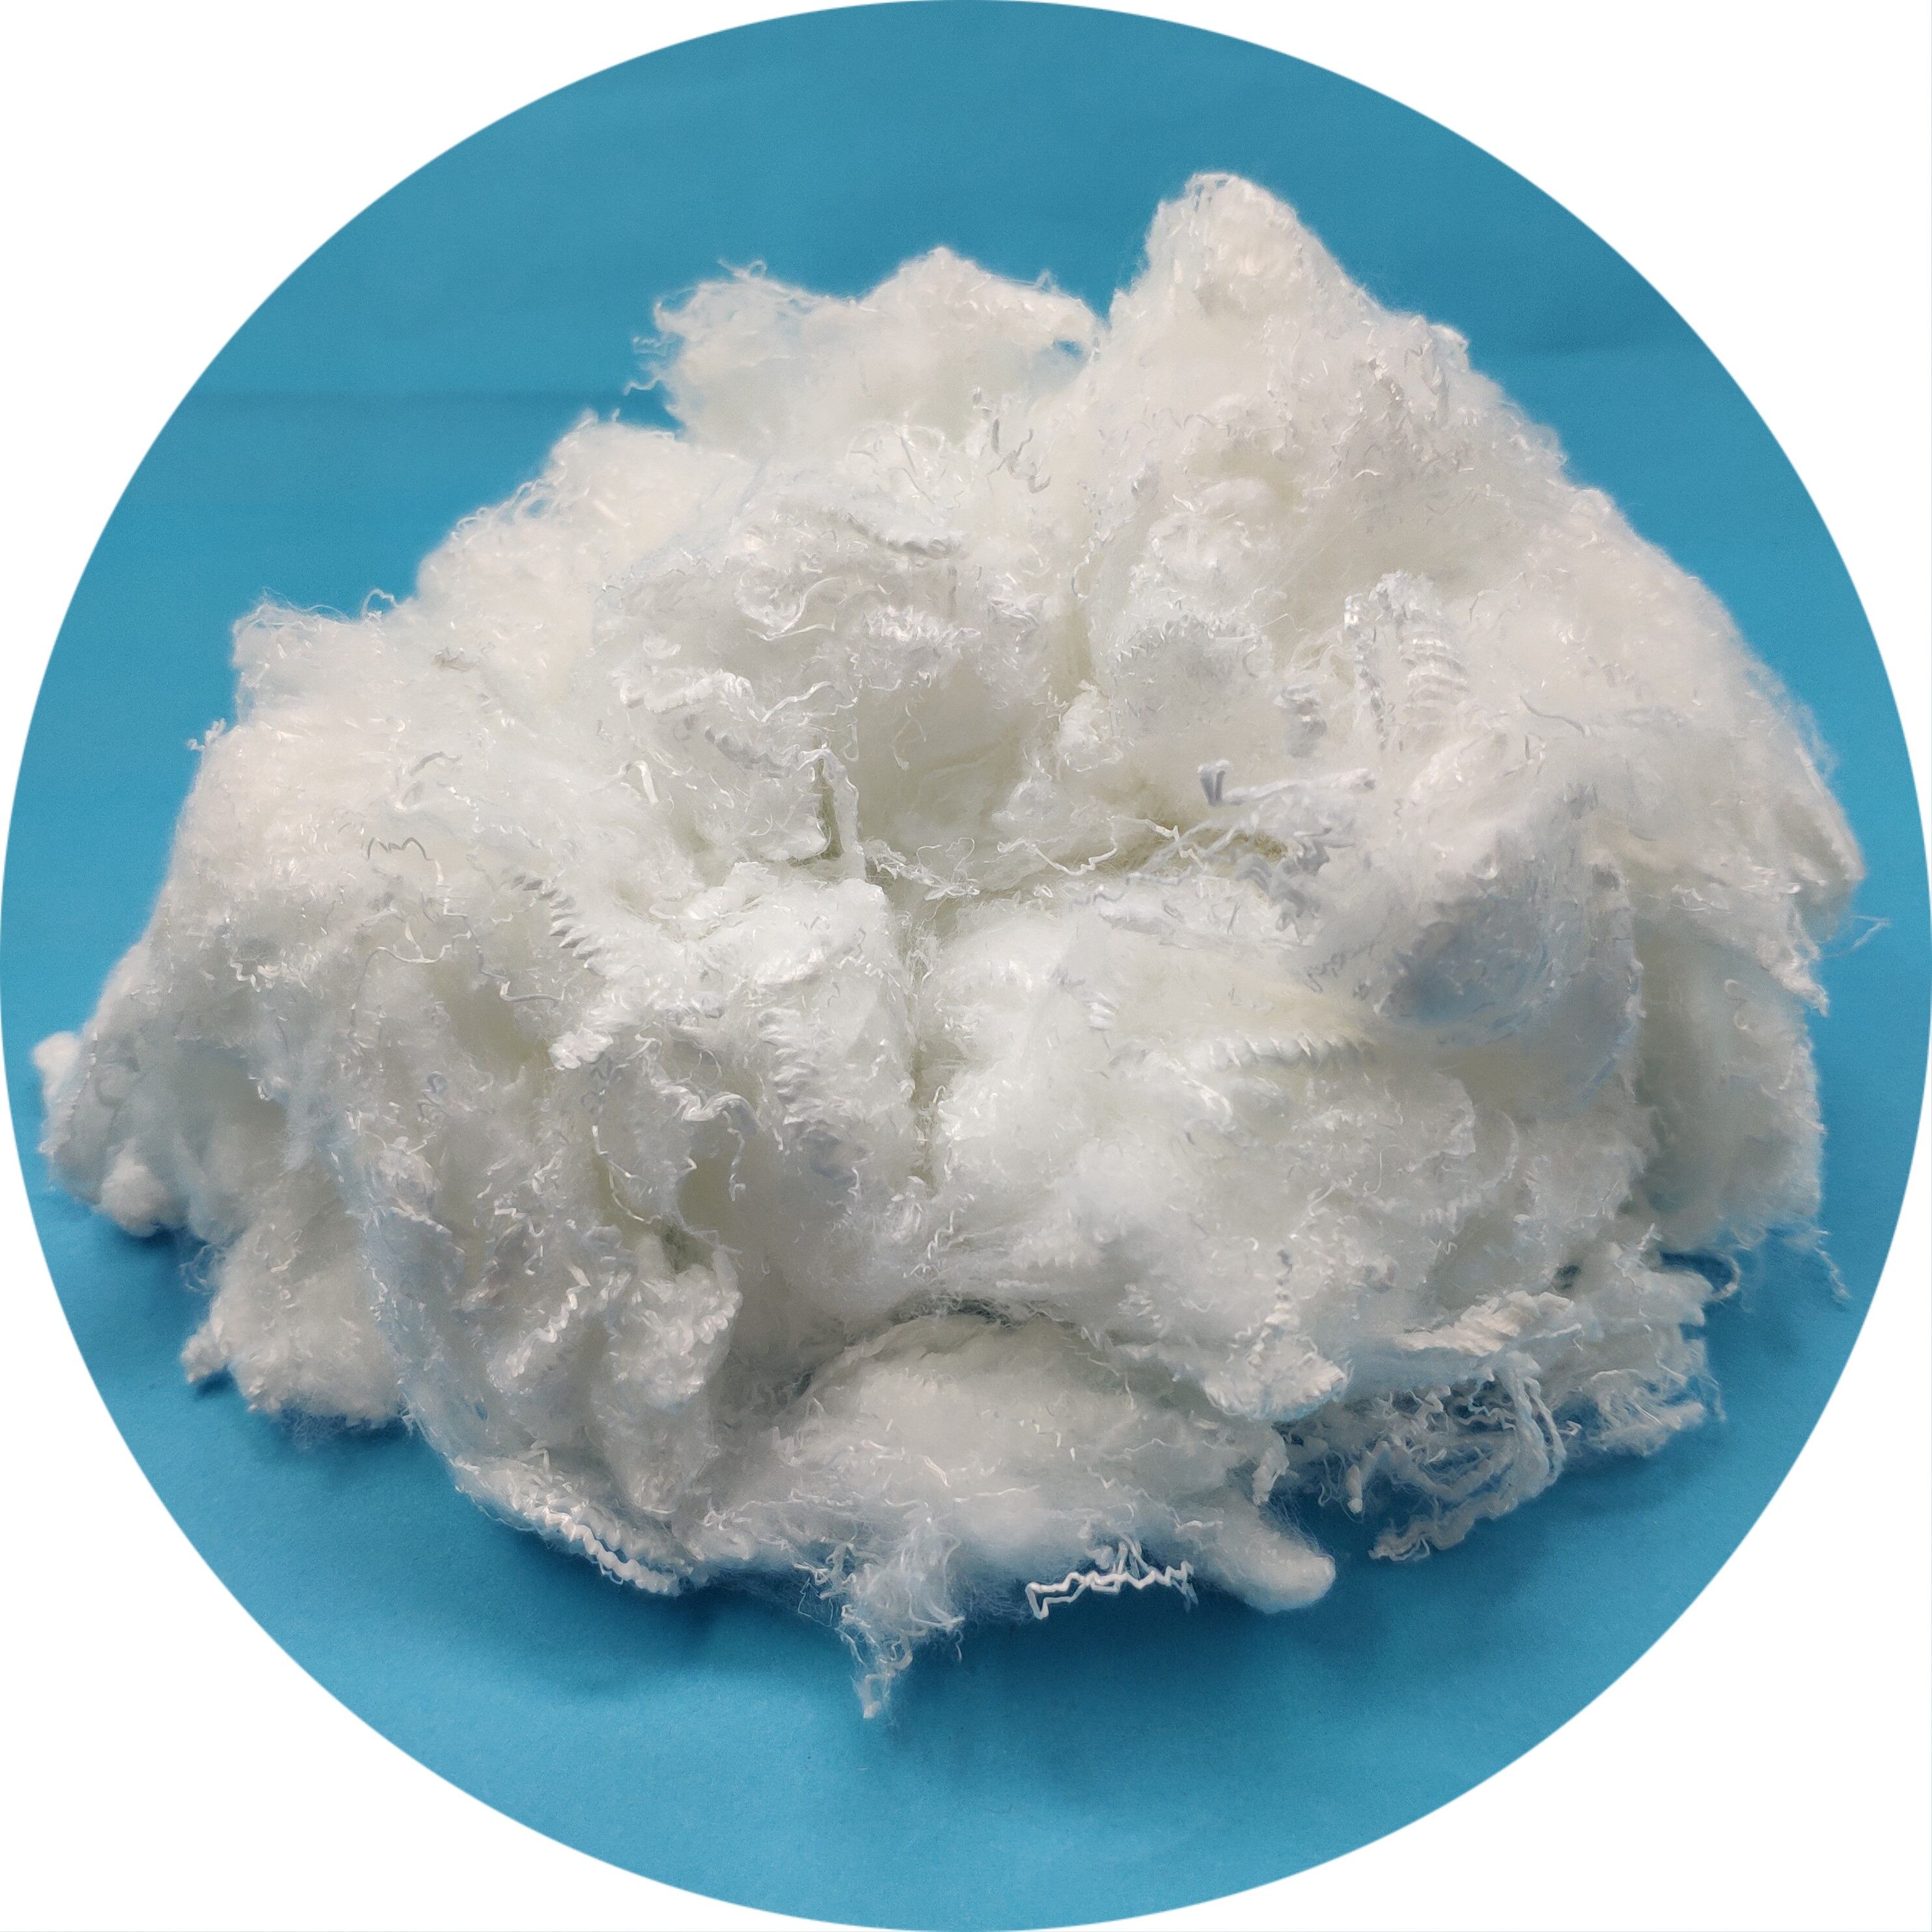 Hcs Polyester Staple Fiber Silicone Or Non-silicon Cotton Stuffing